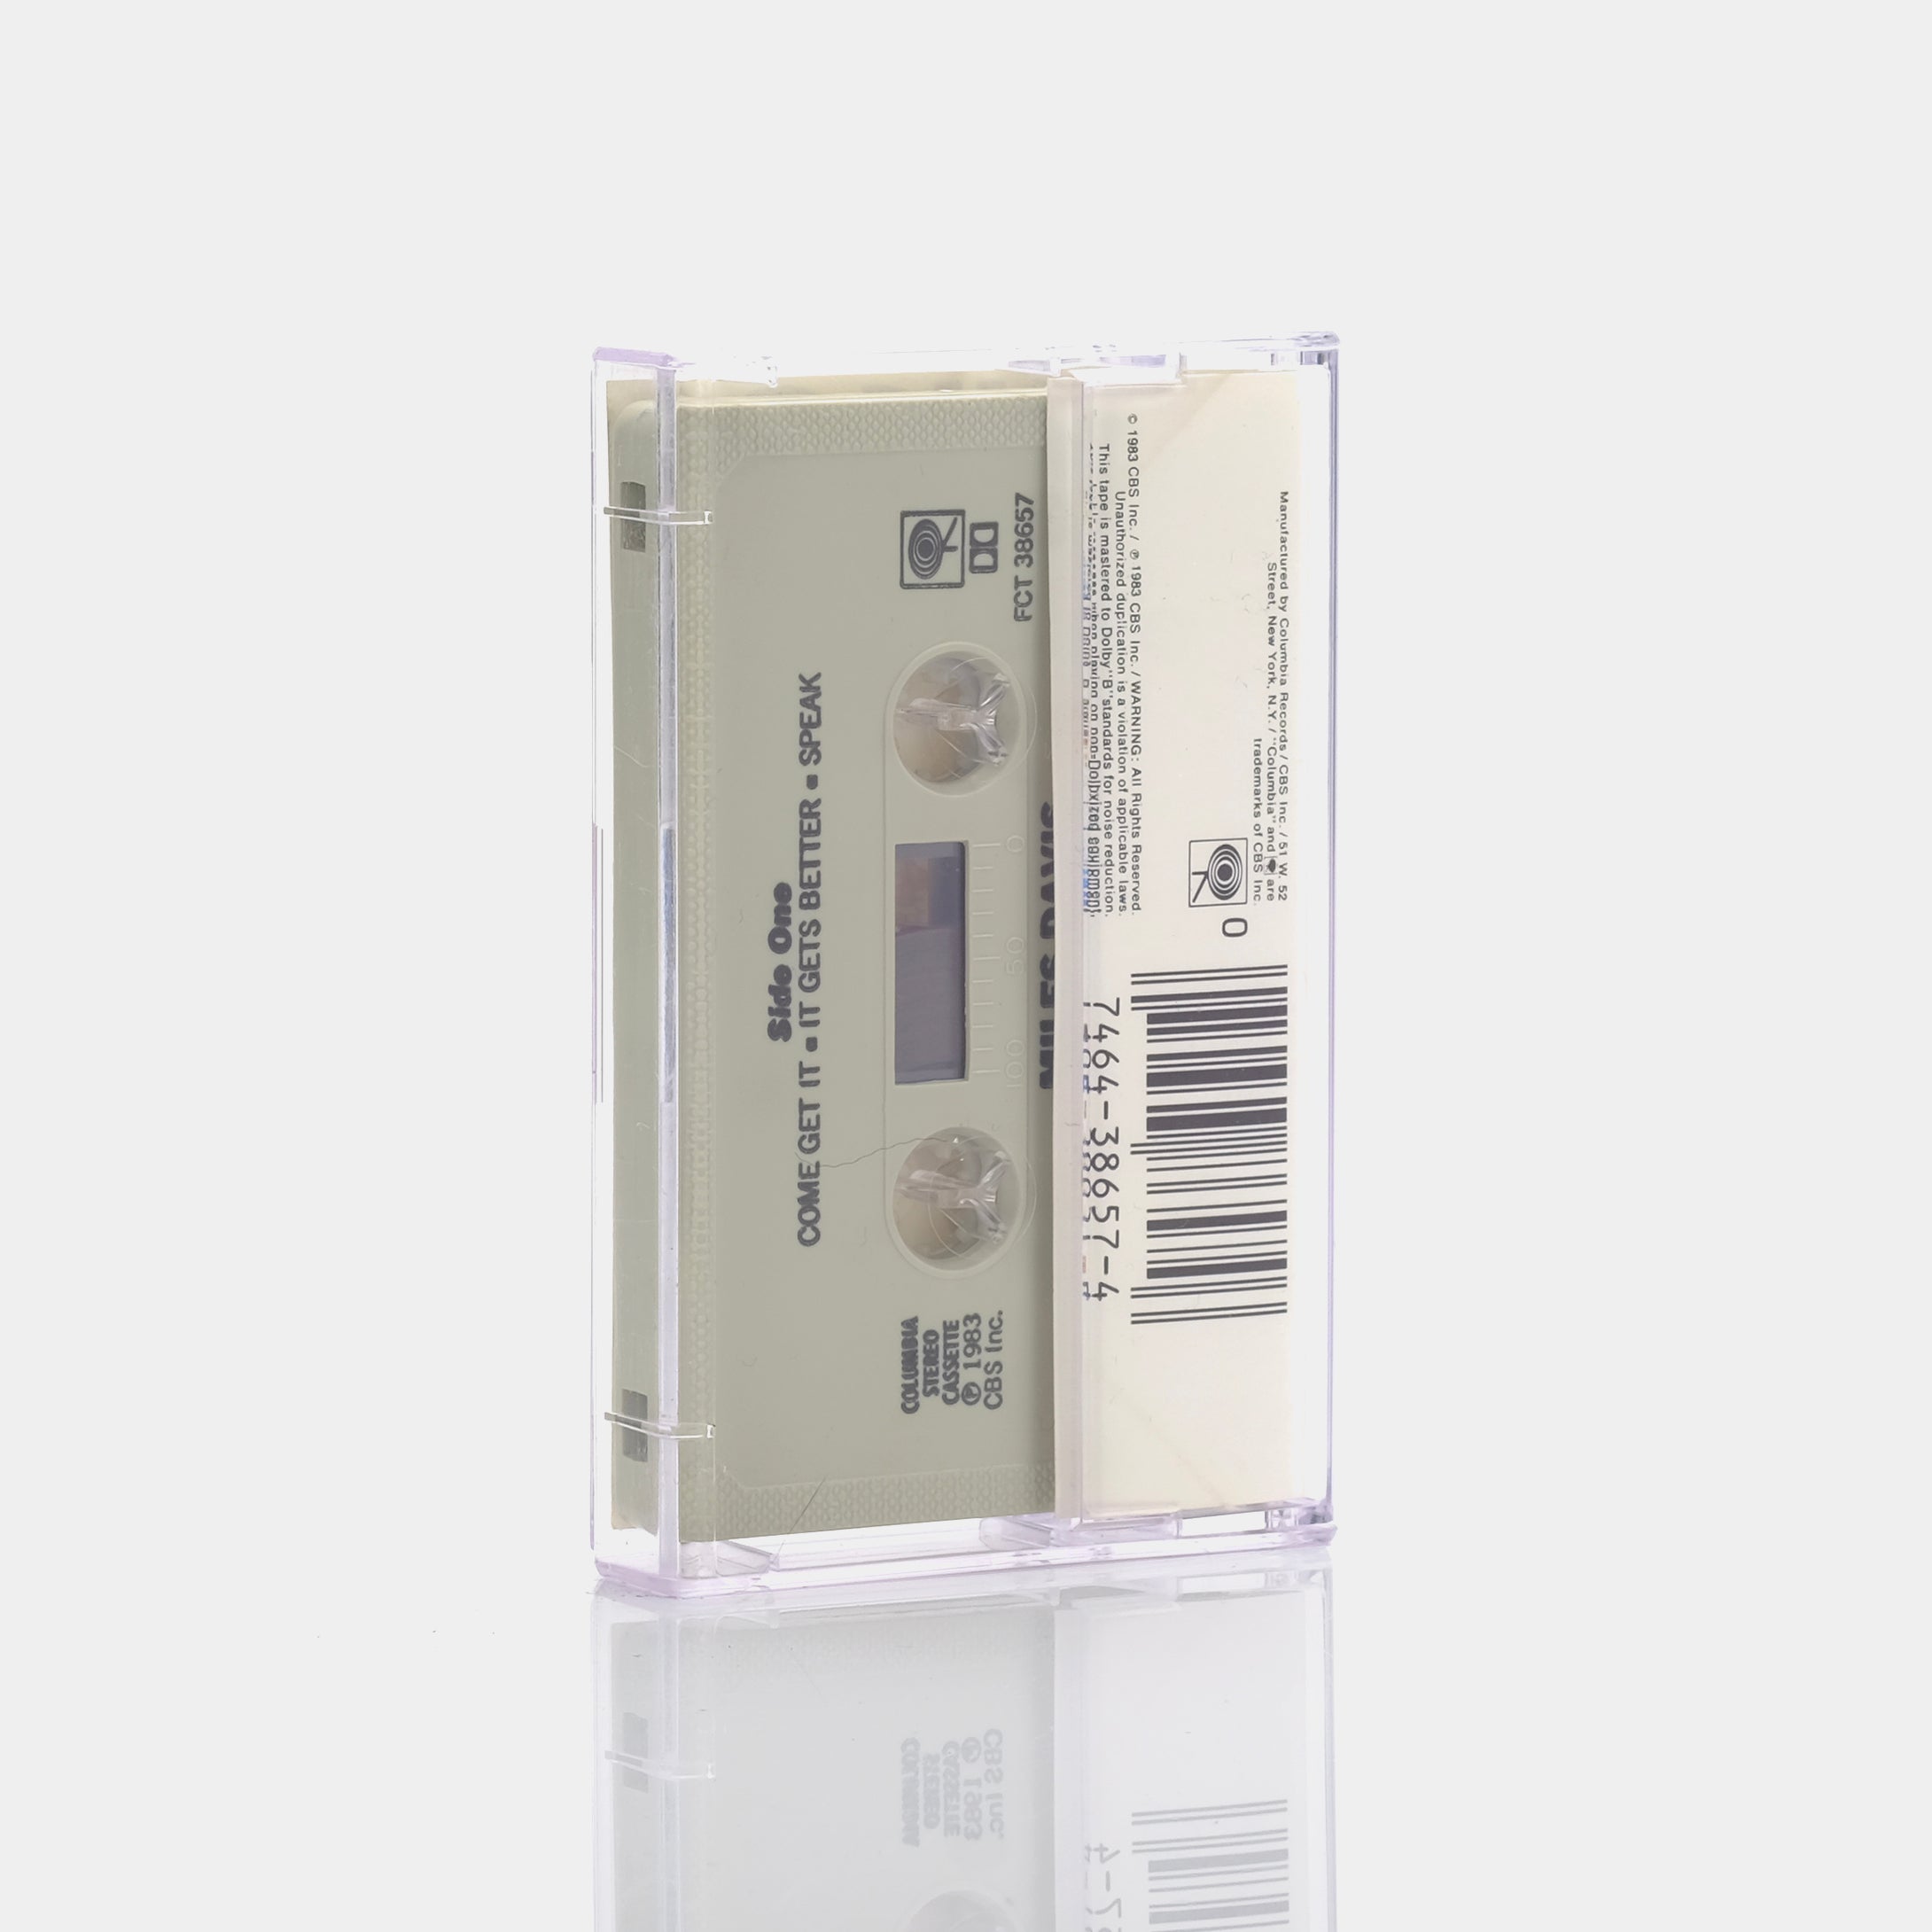 Miles Davis - Star People Cassette Tape